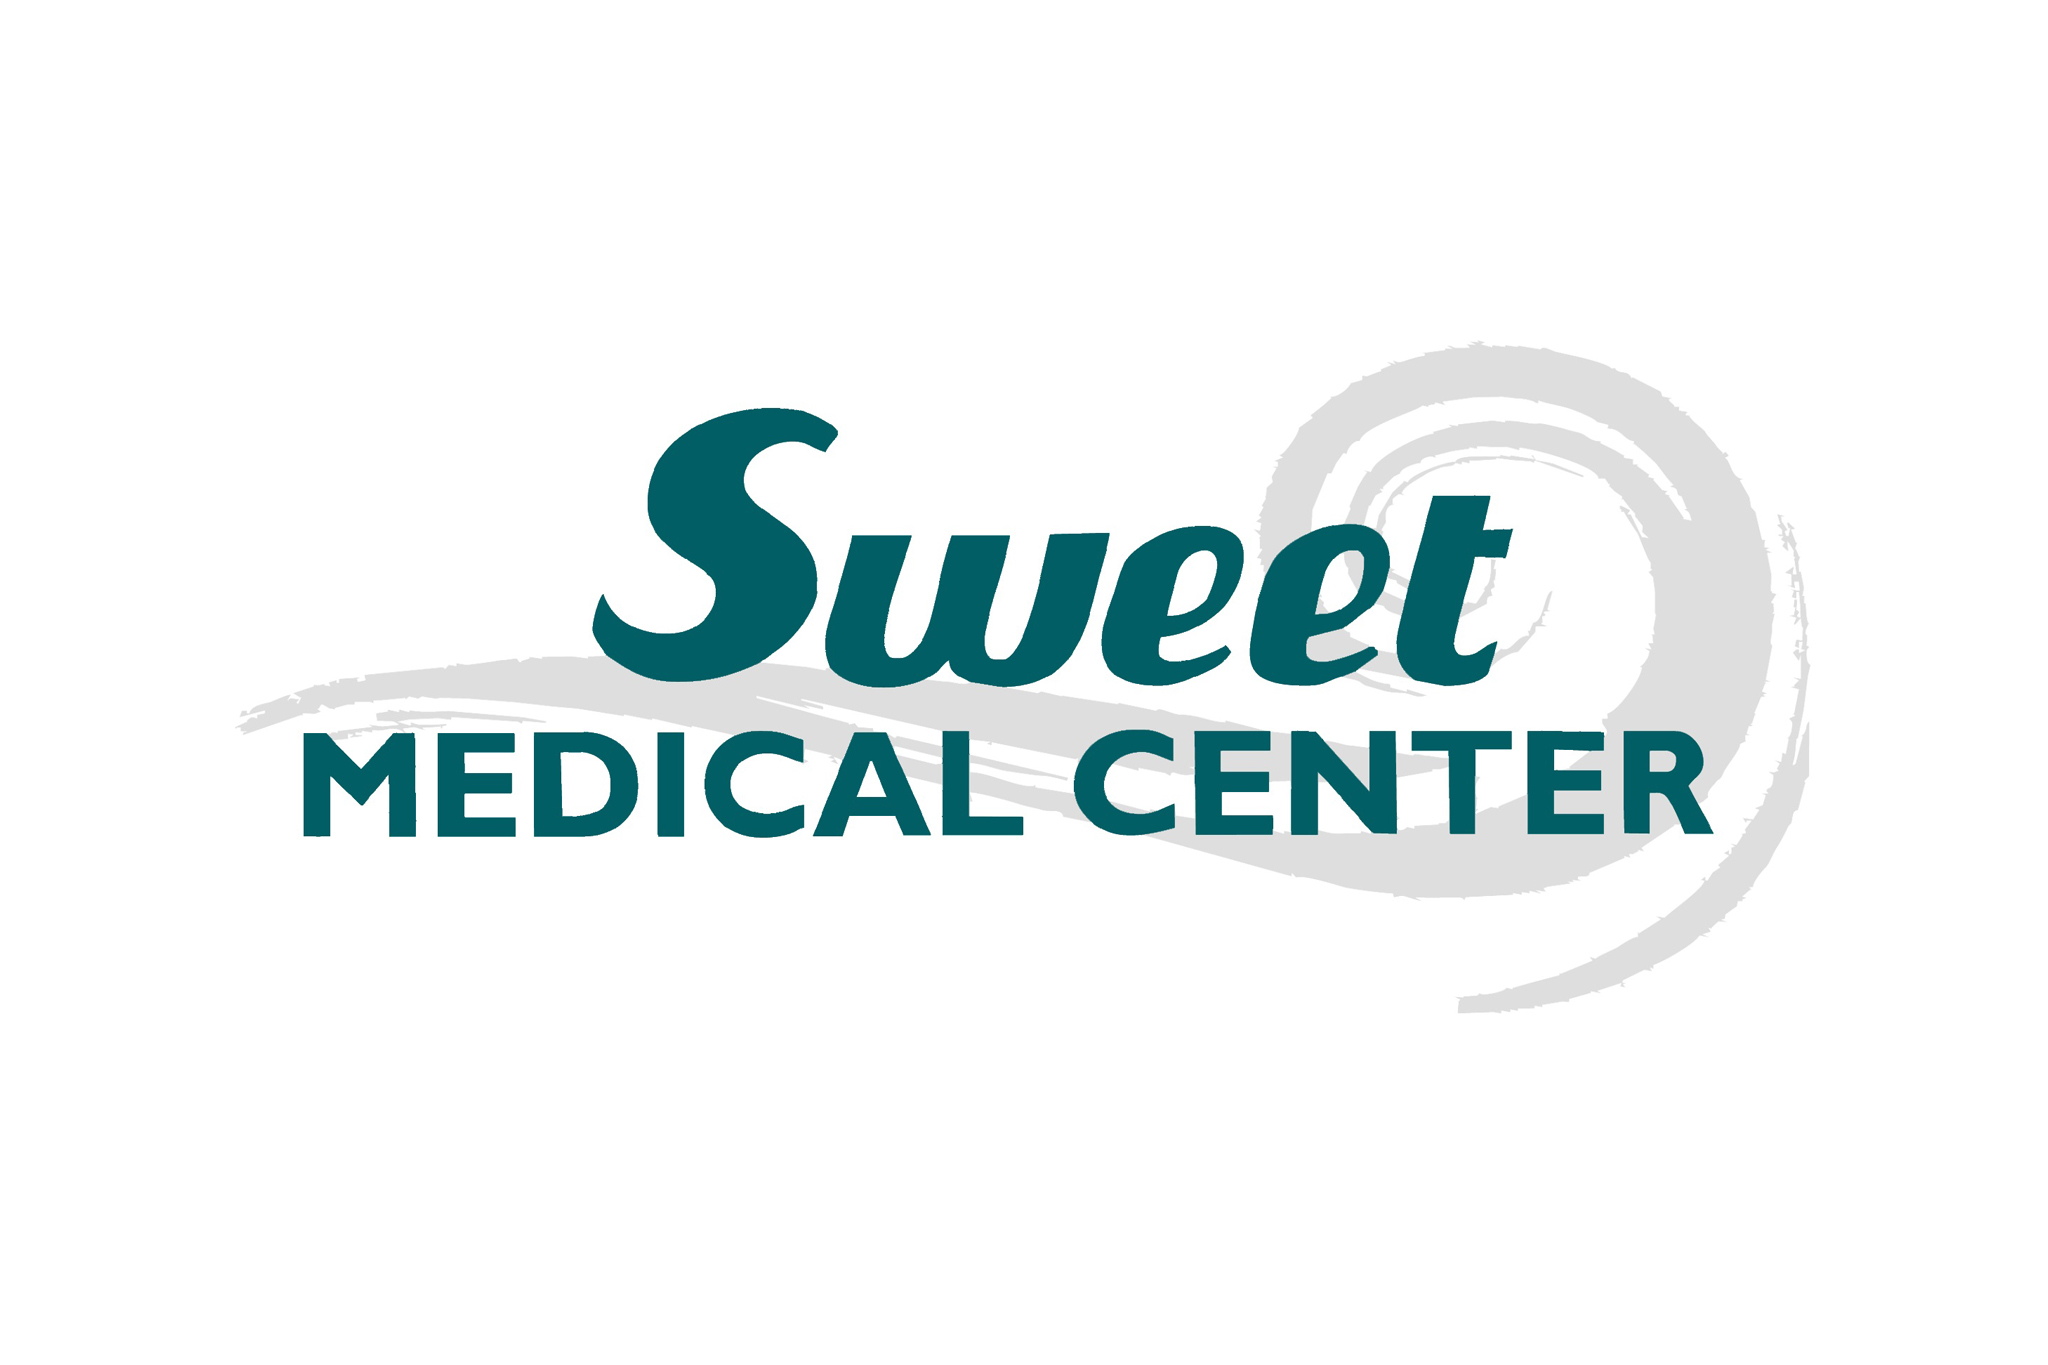 Video for Sweet Medical Center